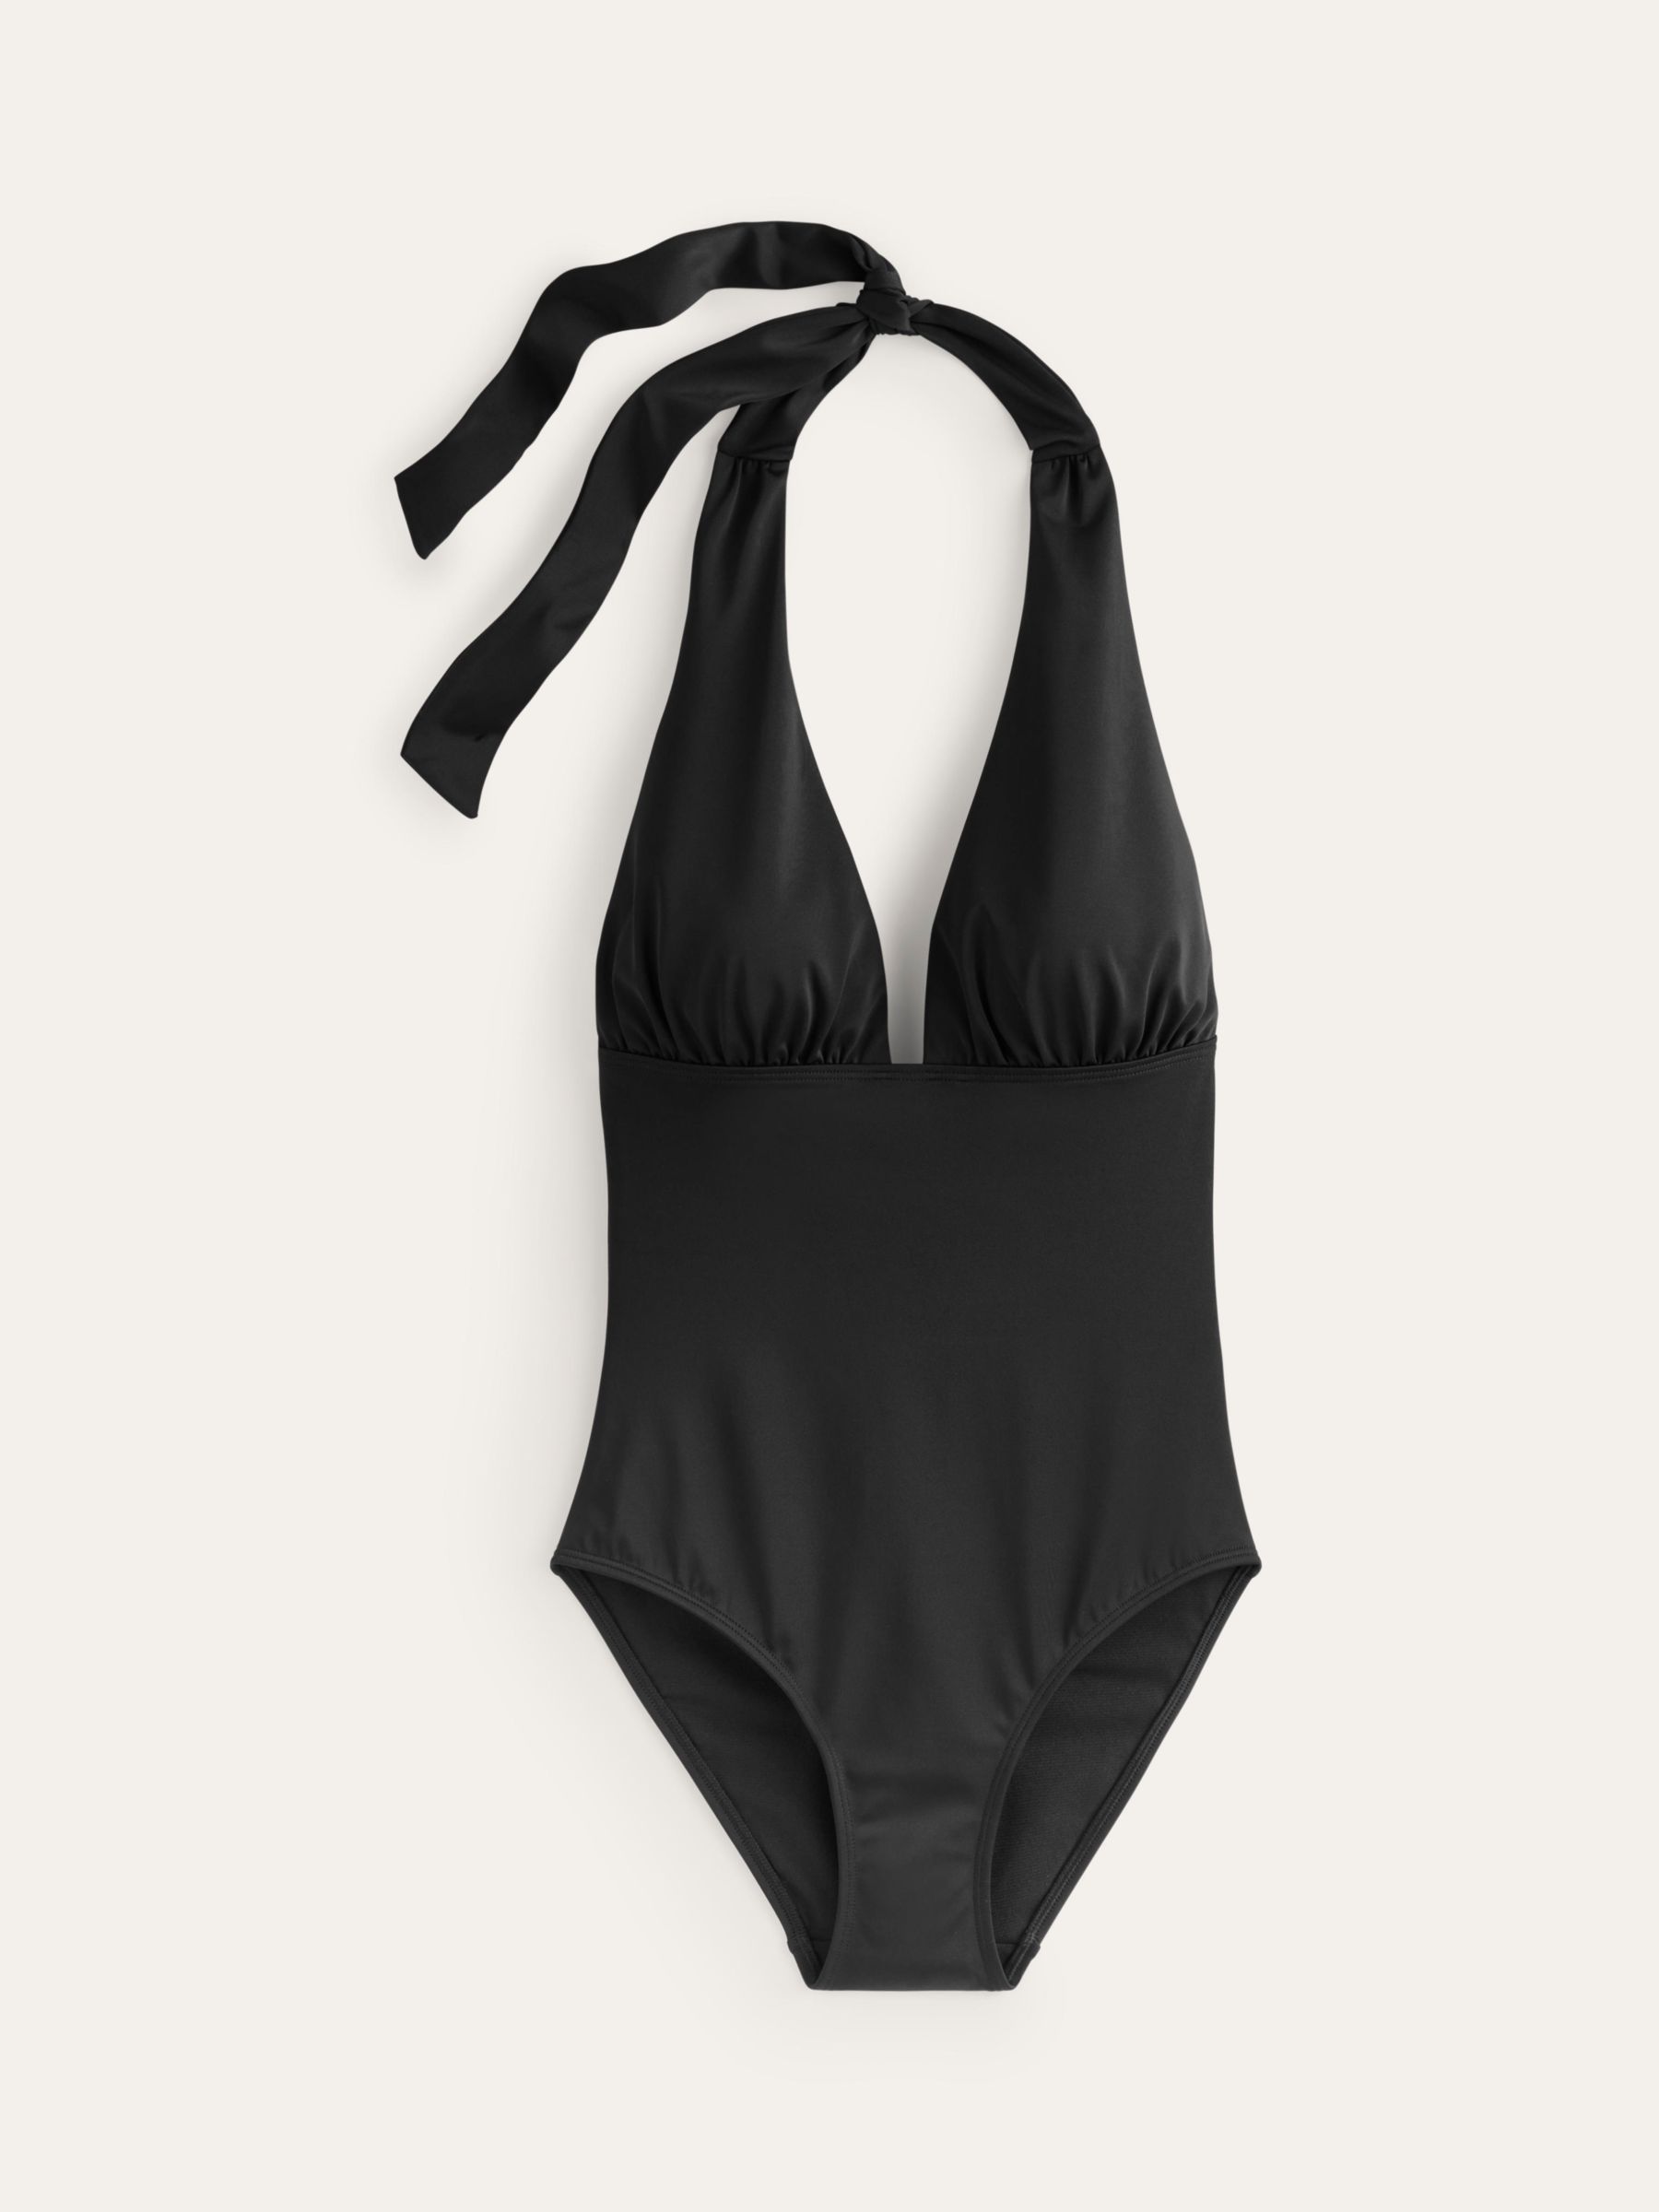 Boden Merano Plunge Halter Neck Swimsuit, Black, 8